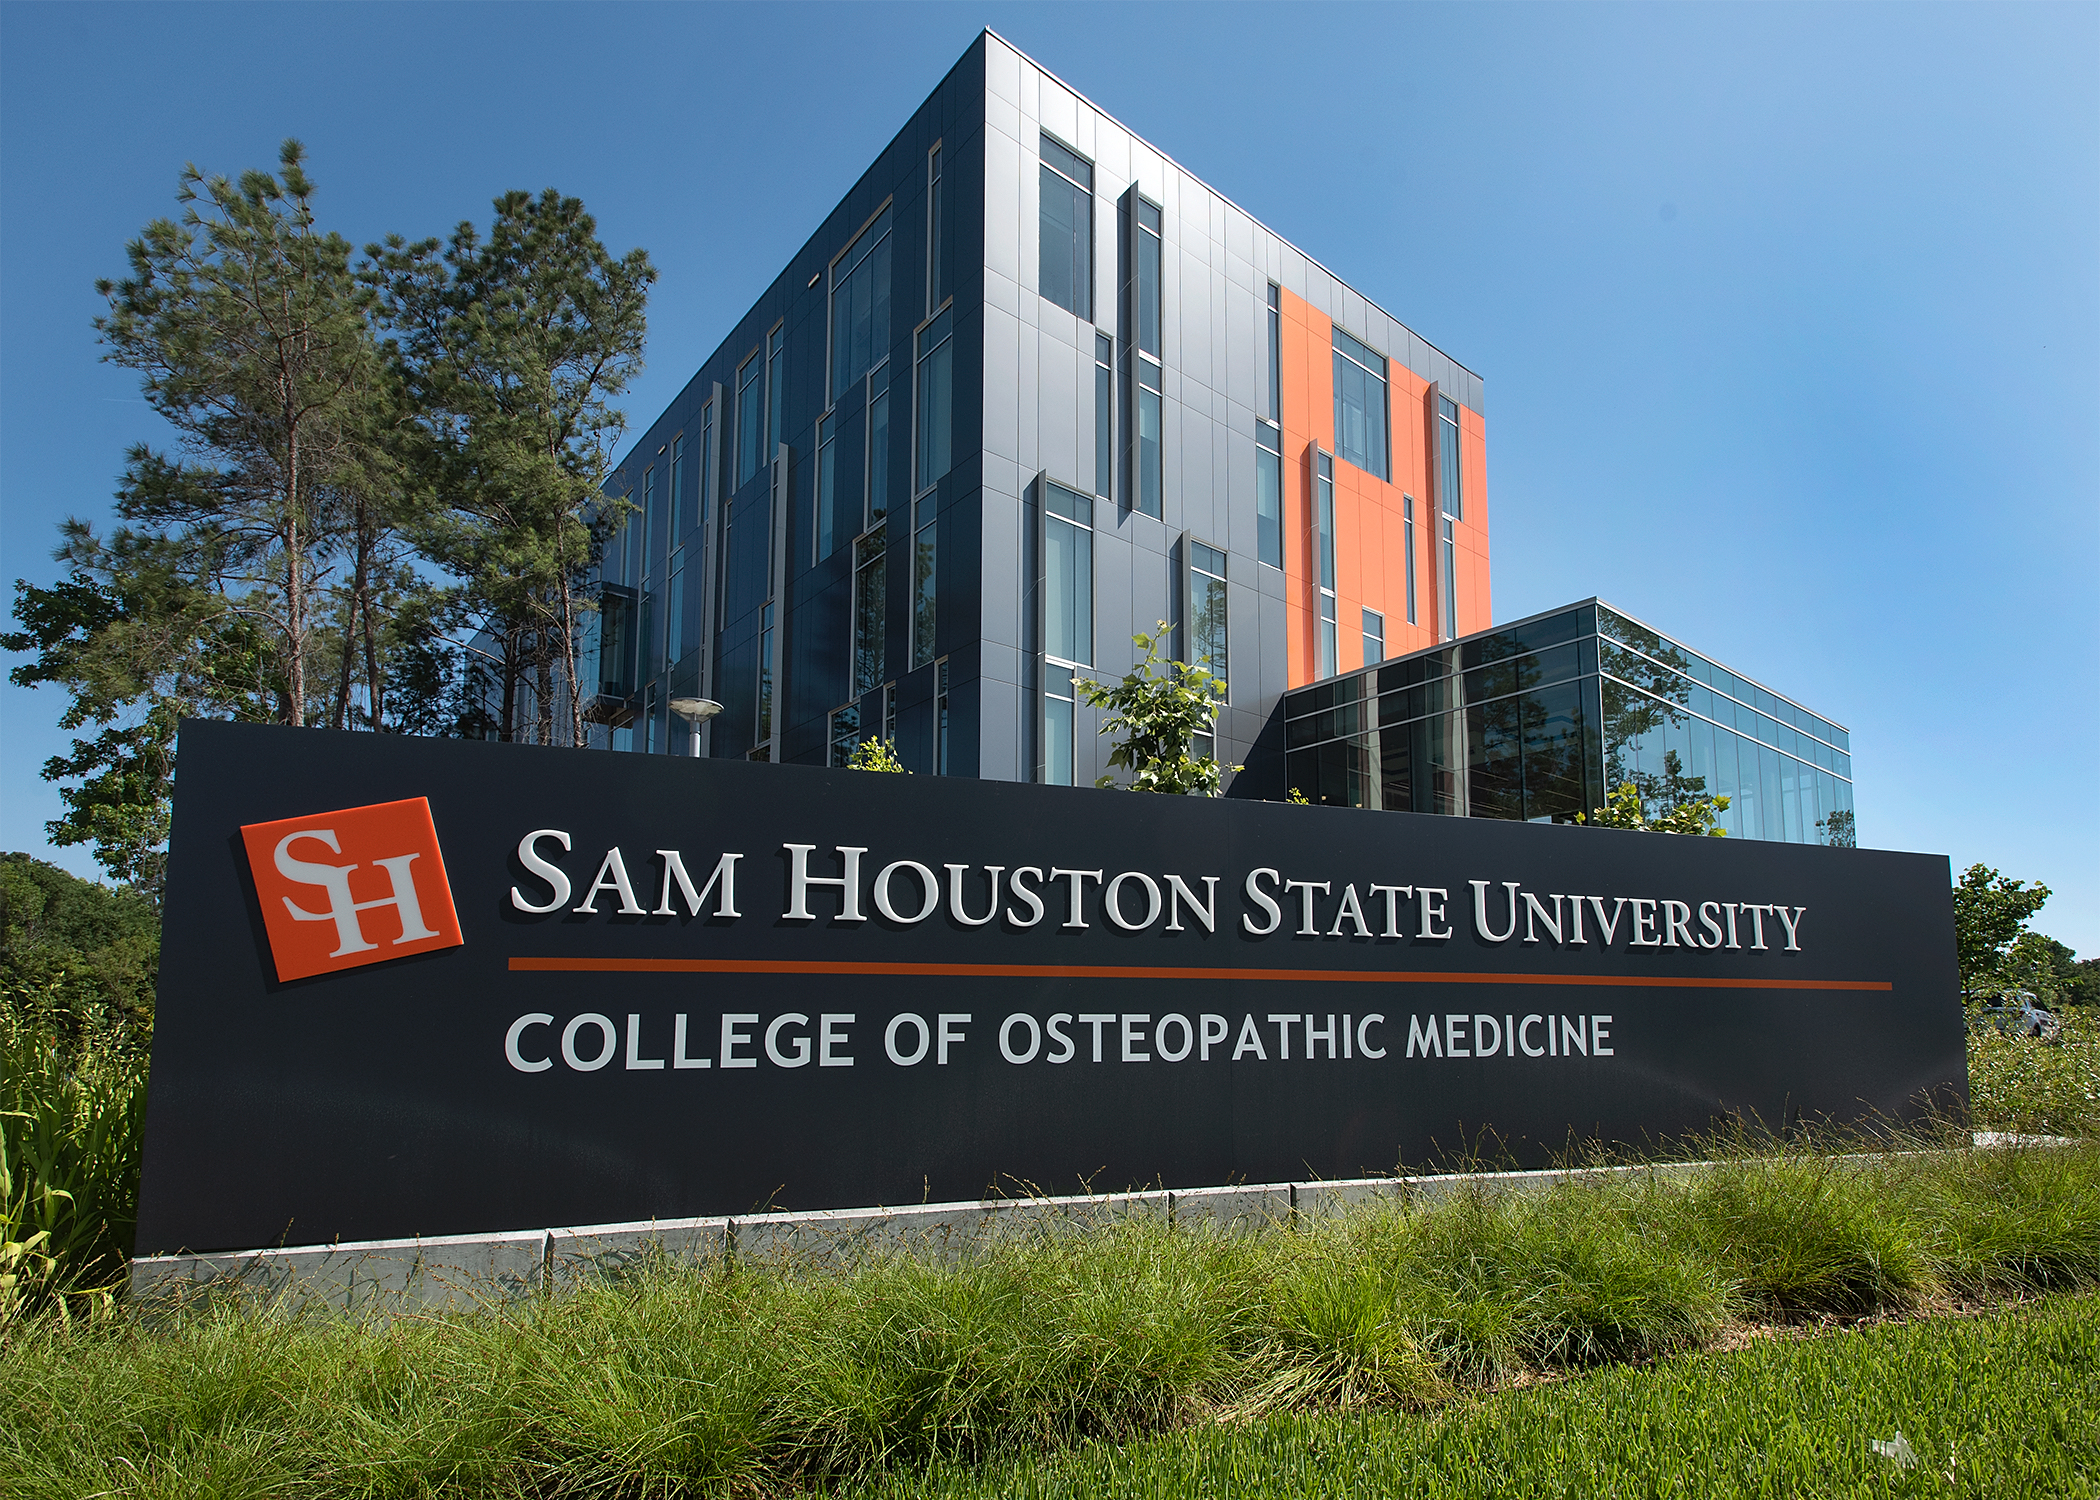 Sam Houston State University College of Osteopathic Medicine